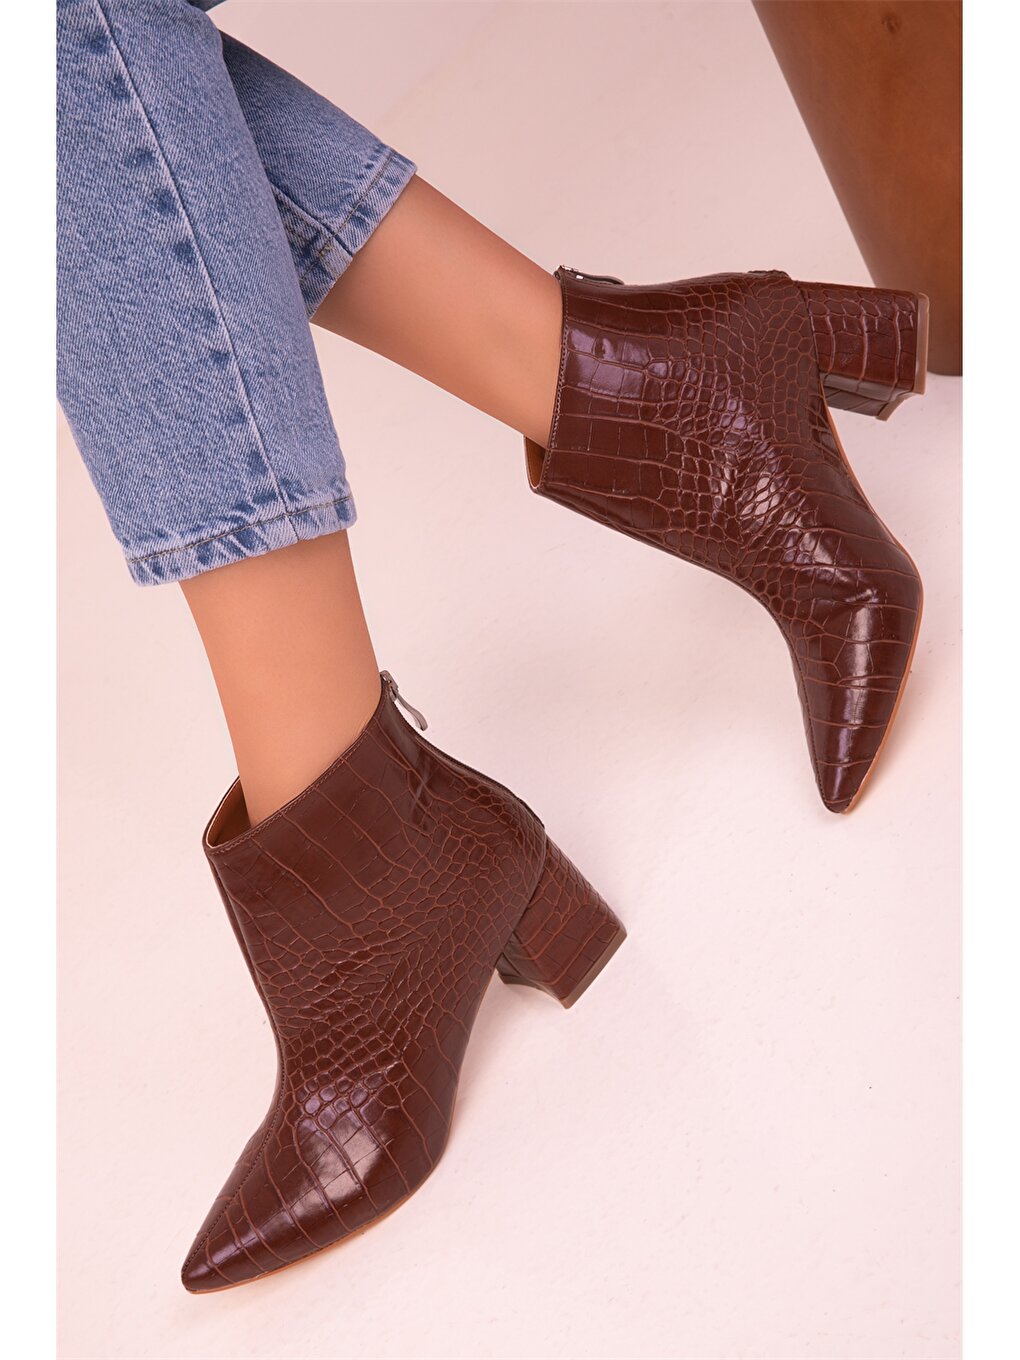 Кожаные женские ботинки на каблуке с узором под крокодиловую кожу Soho Exclusive, карамель